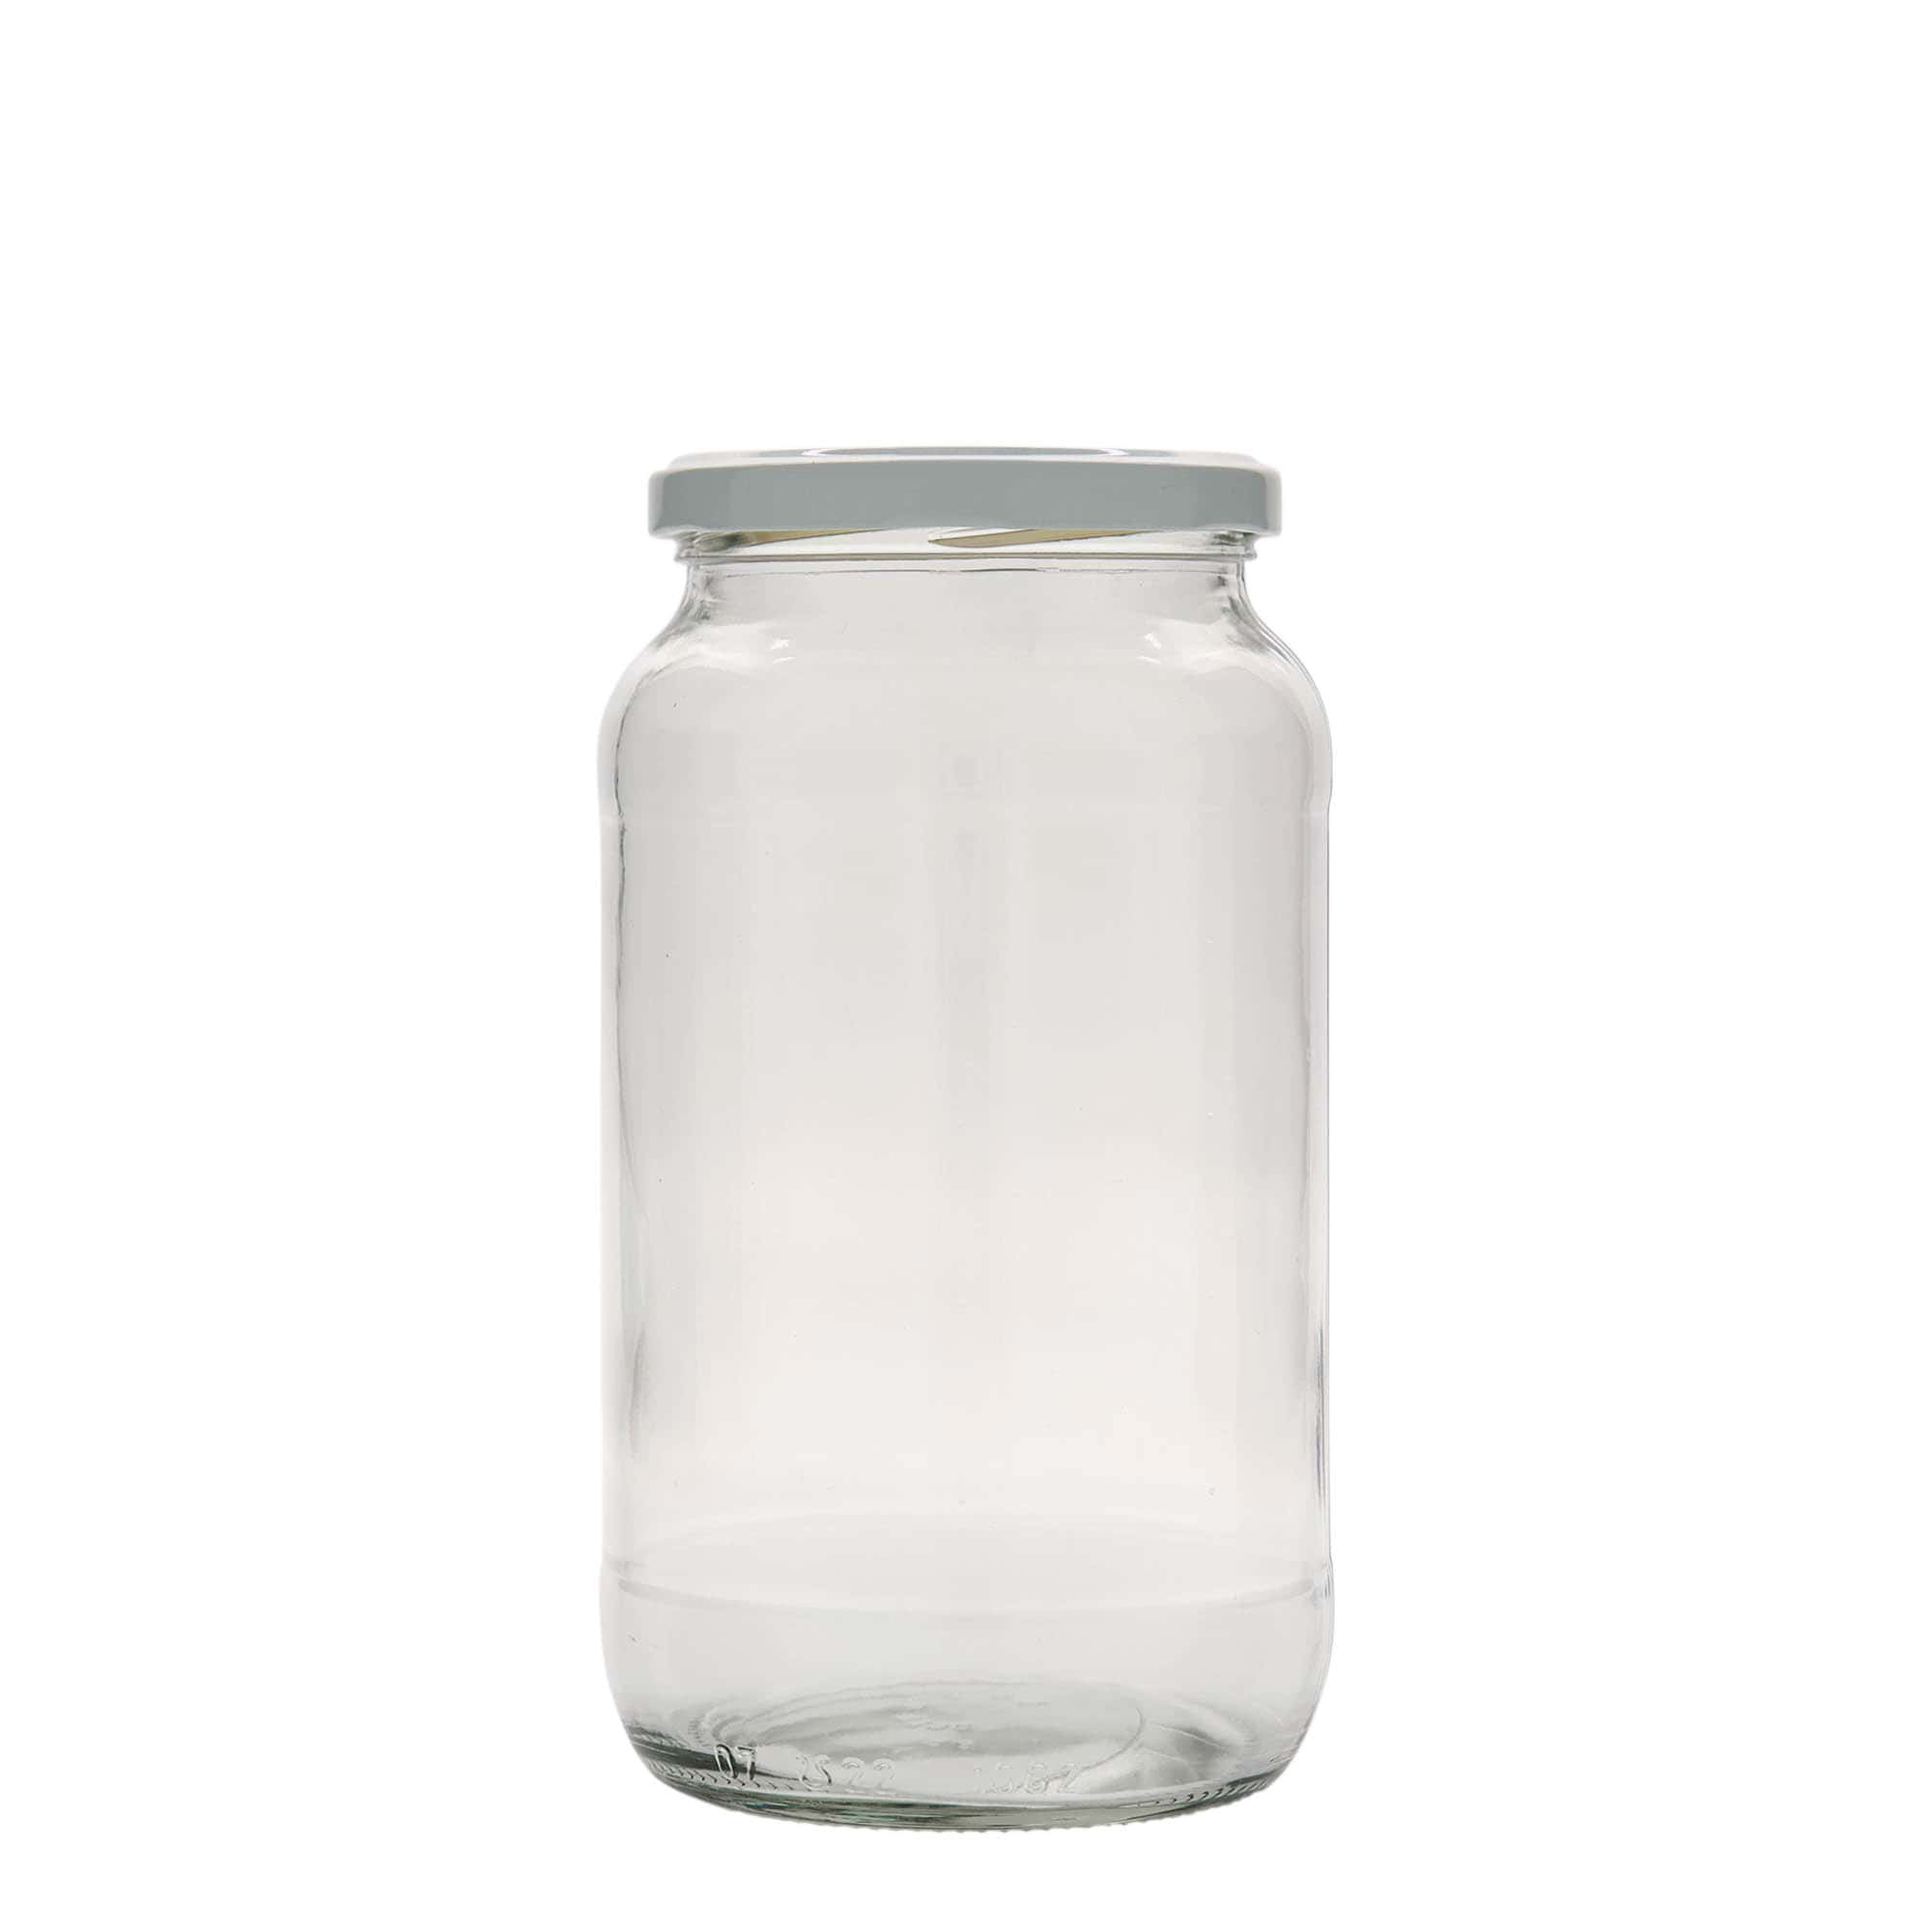 1062 ml preserving jar, closure: twist off (TO 82)